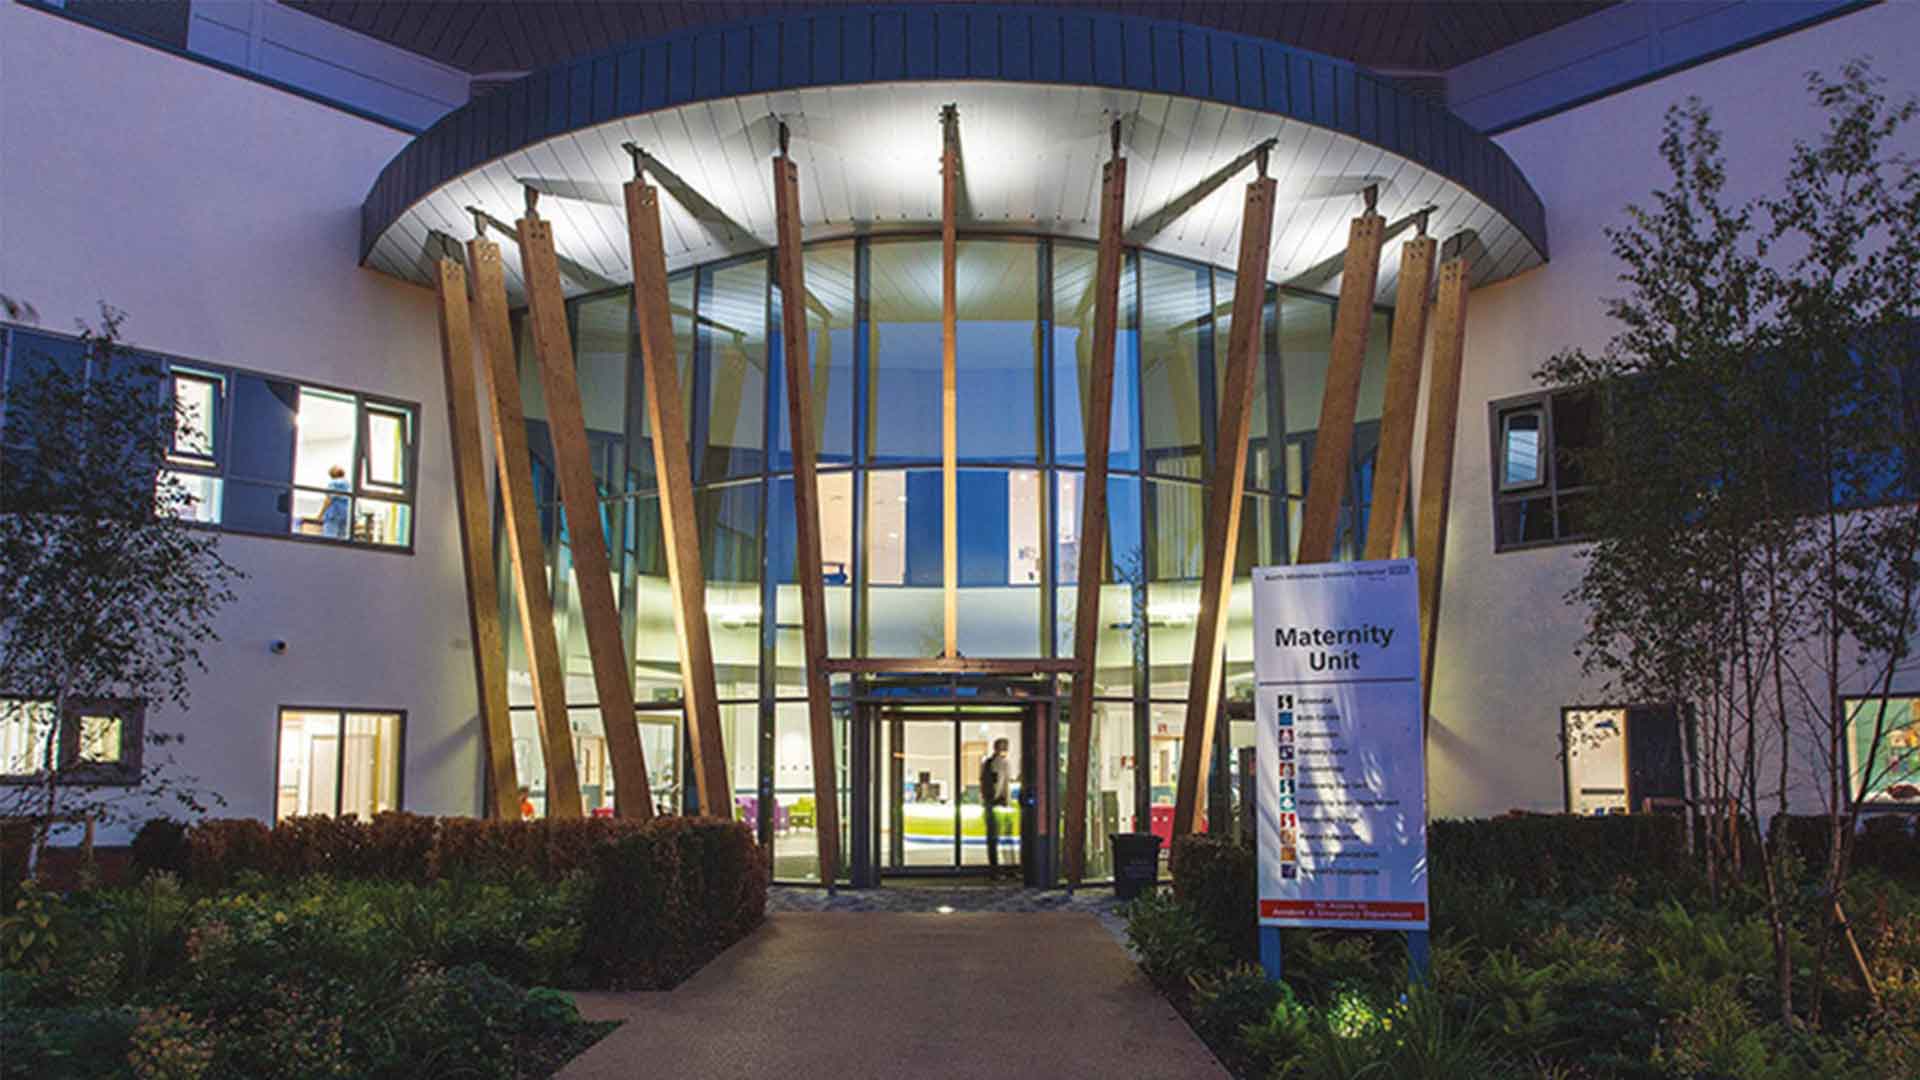 An NHS facility